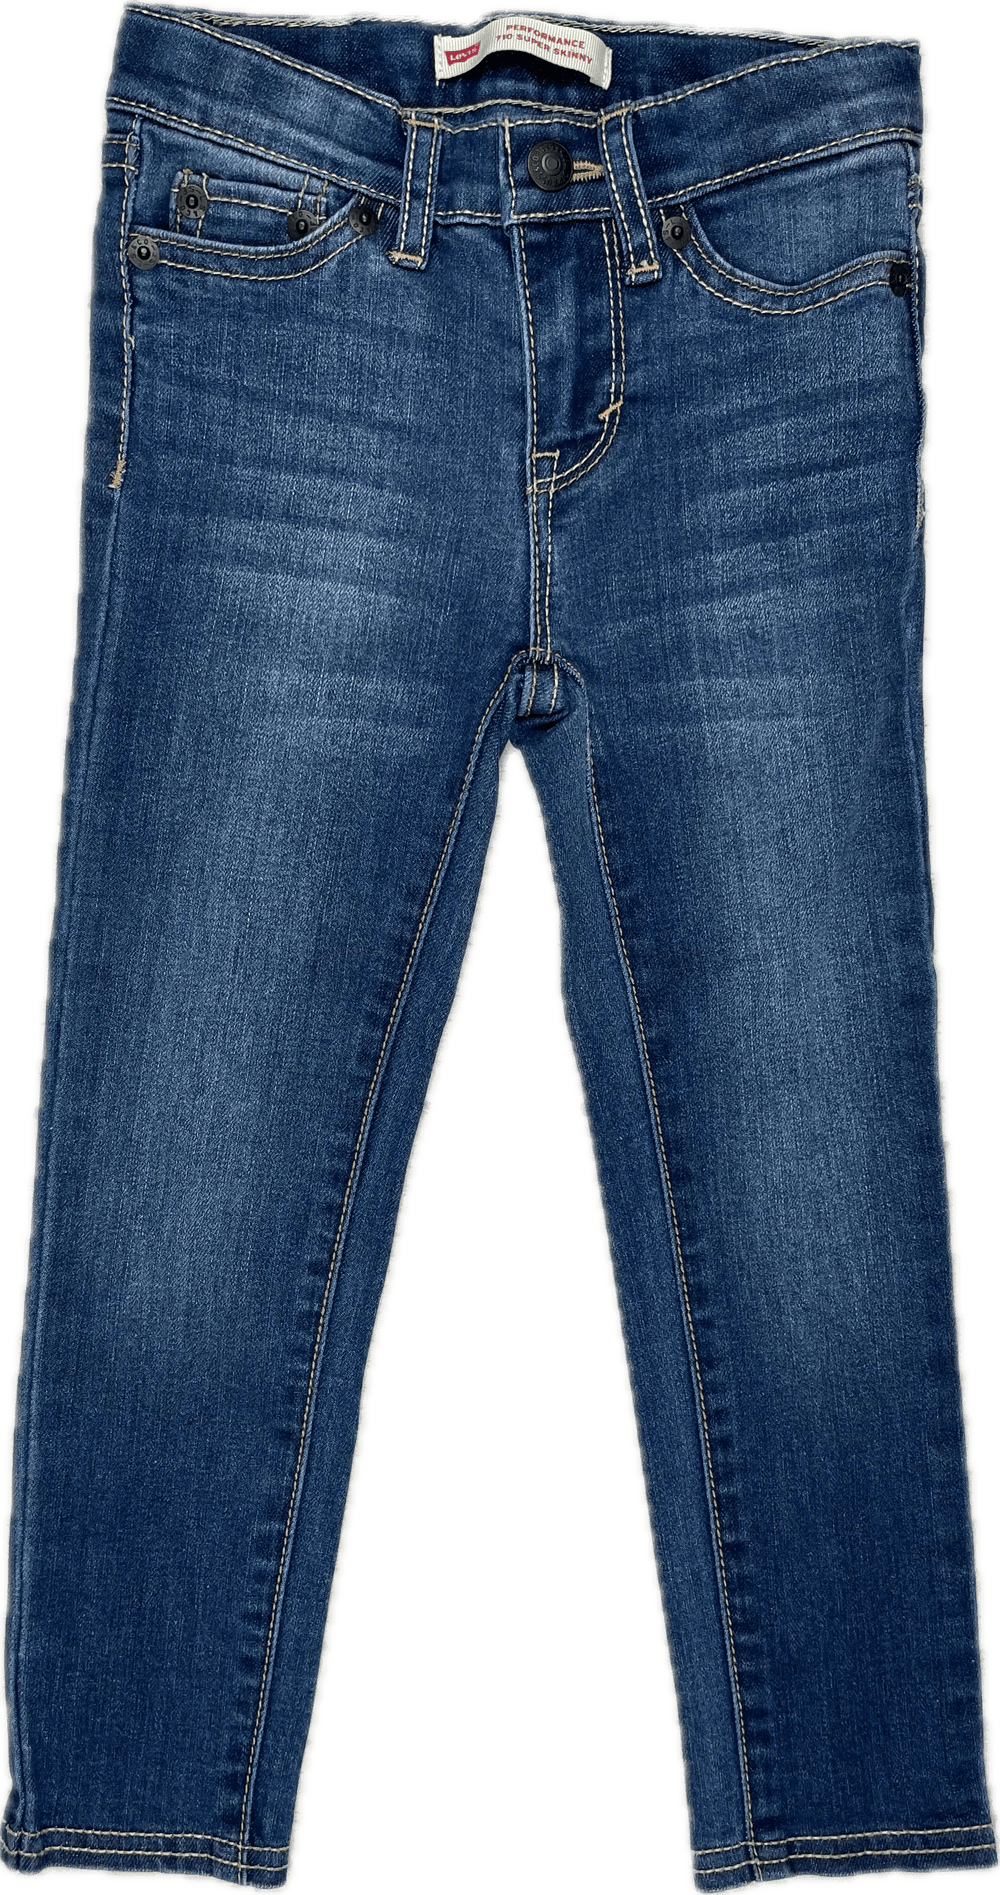 Levis 710 Super Skinny Performance Kids Jeans - Size 4Y - Jean Pool